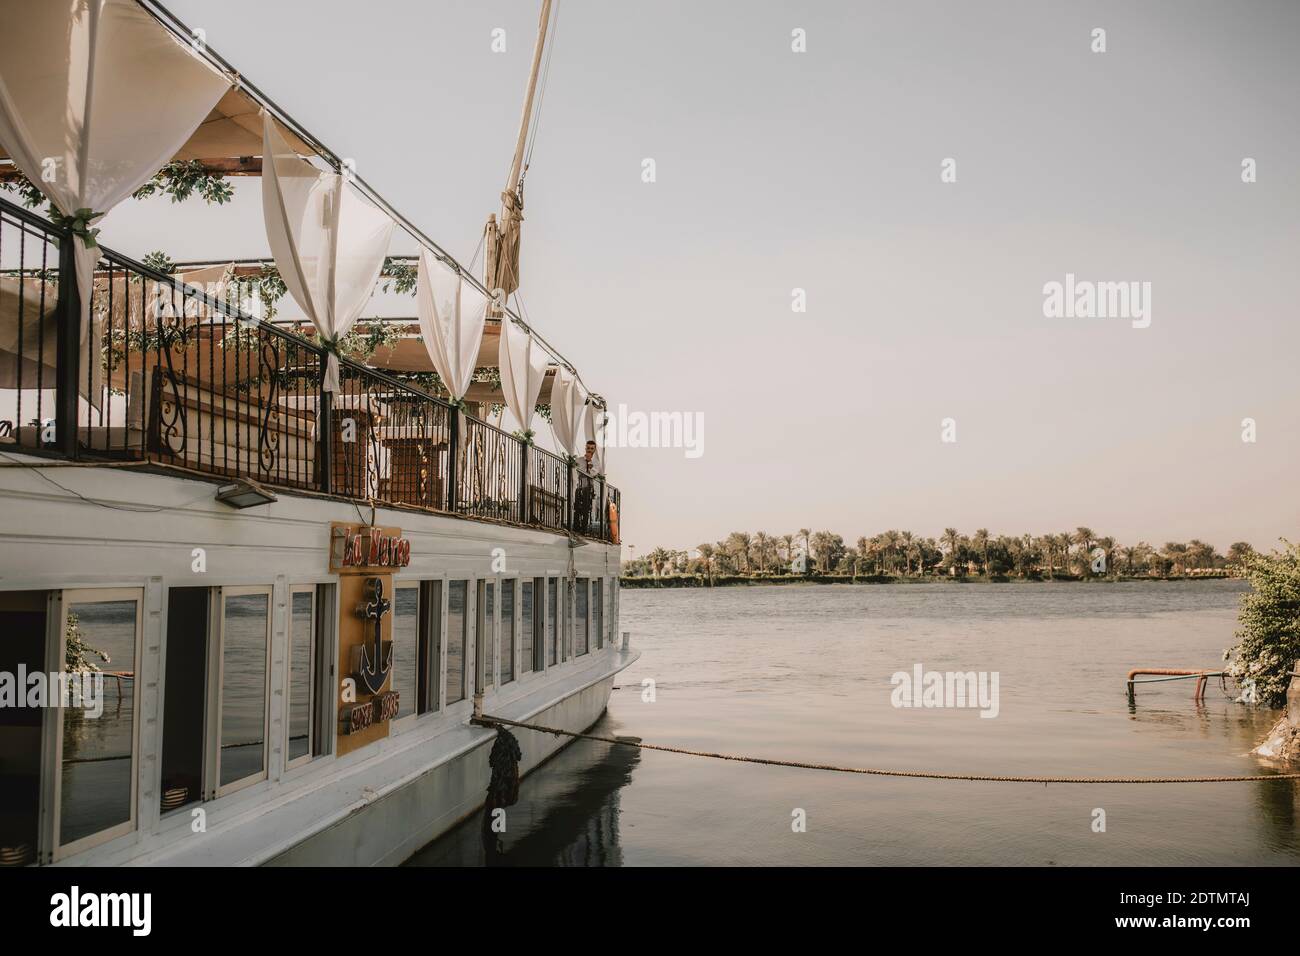 Nile cruise boat in Cairo, Egypt Stock Photo